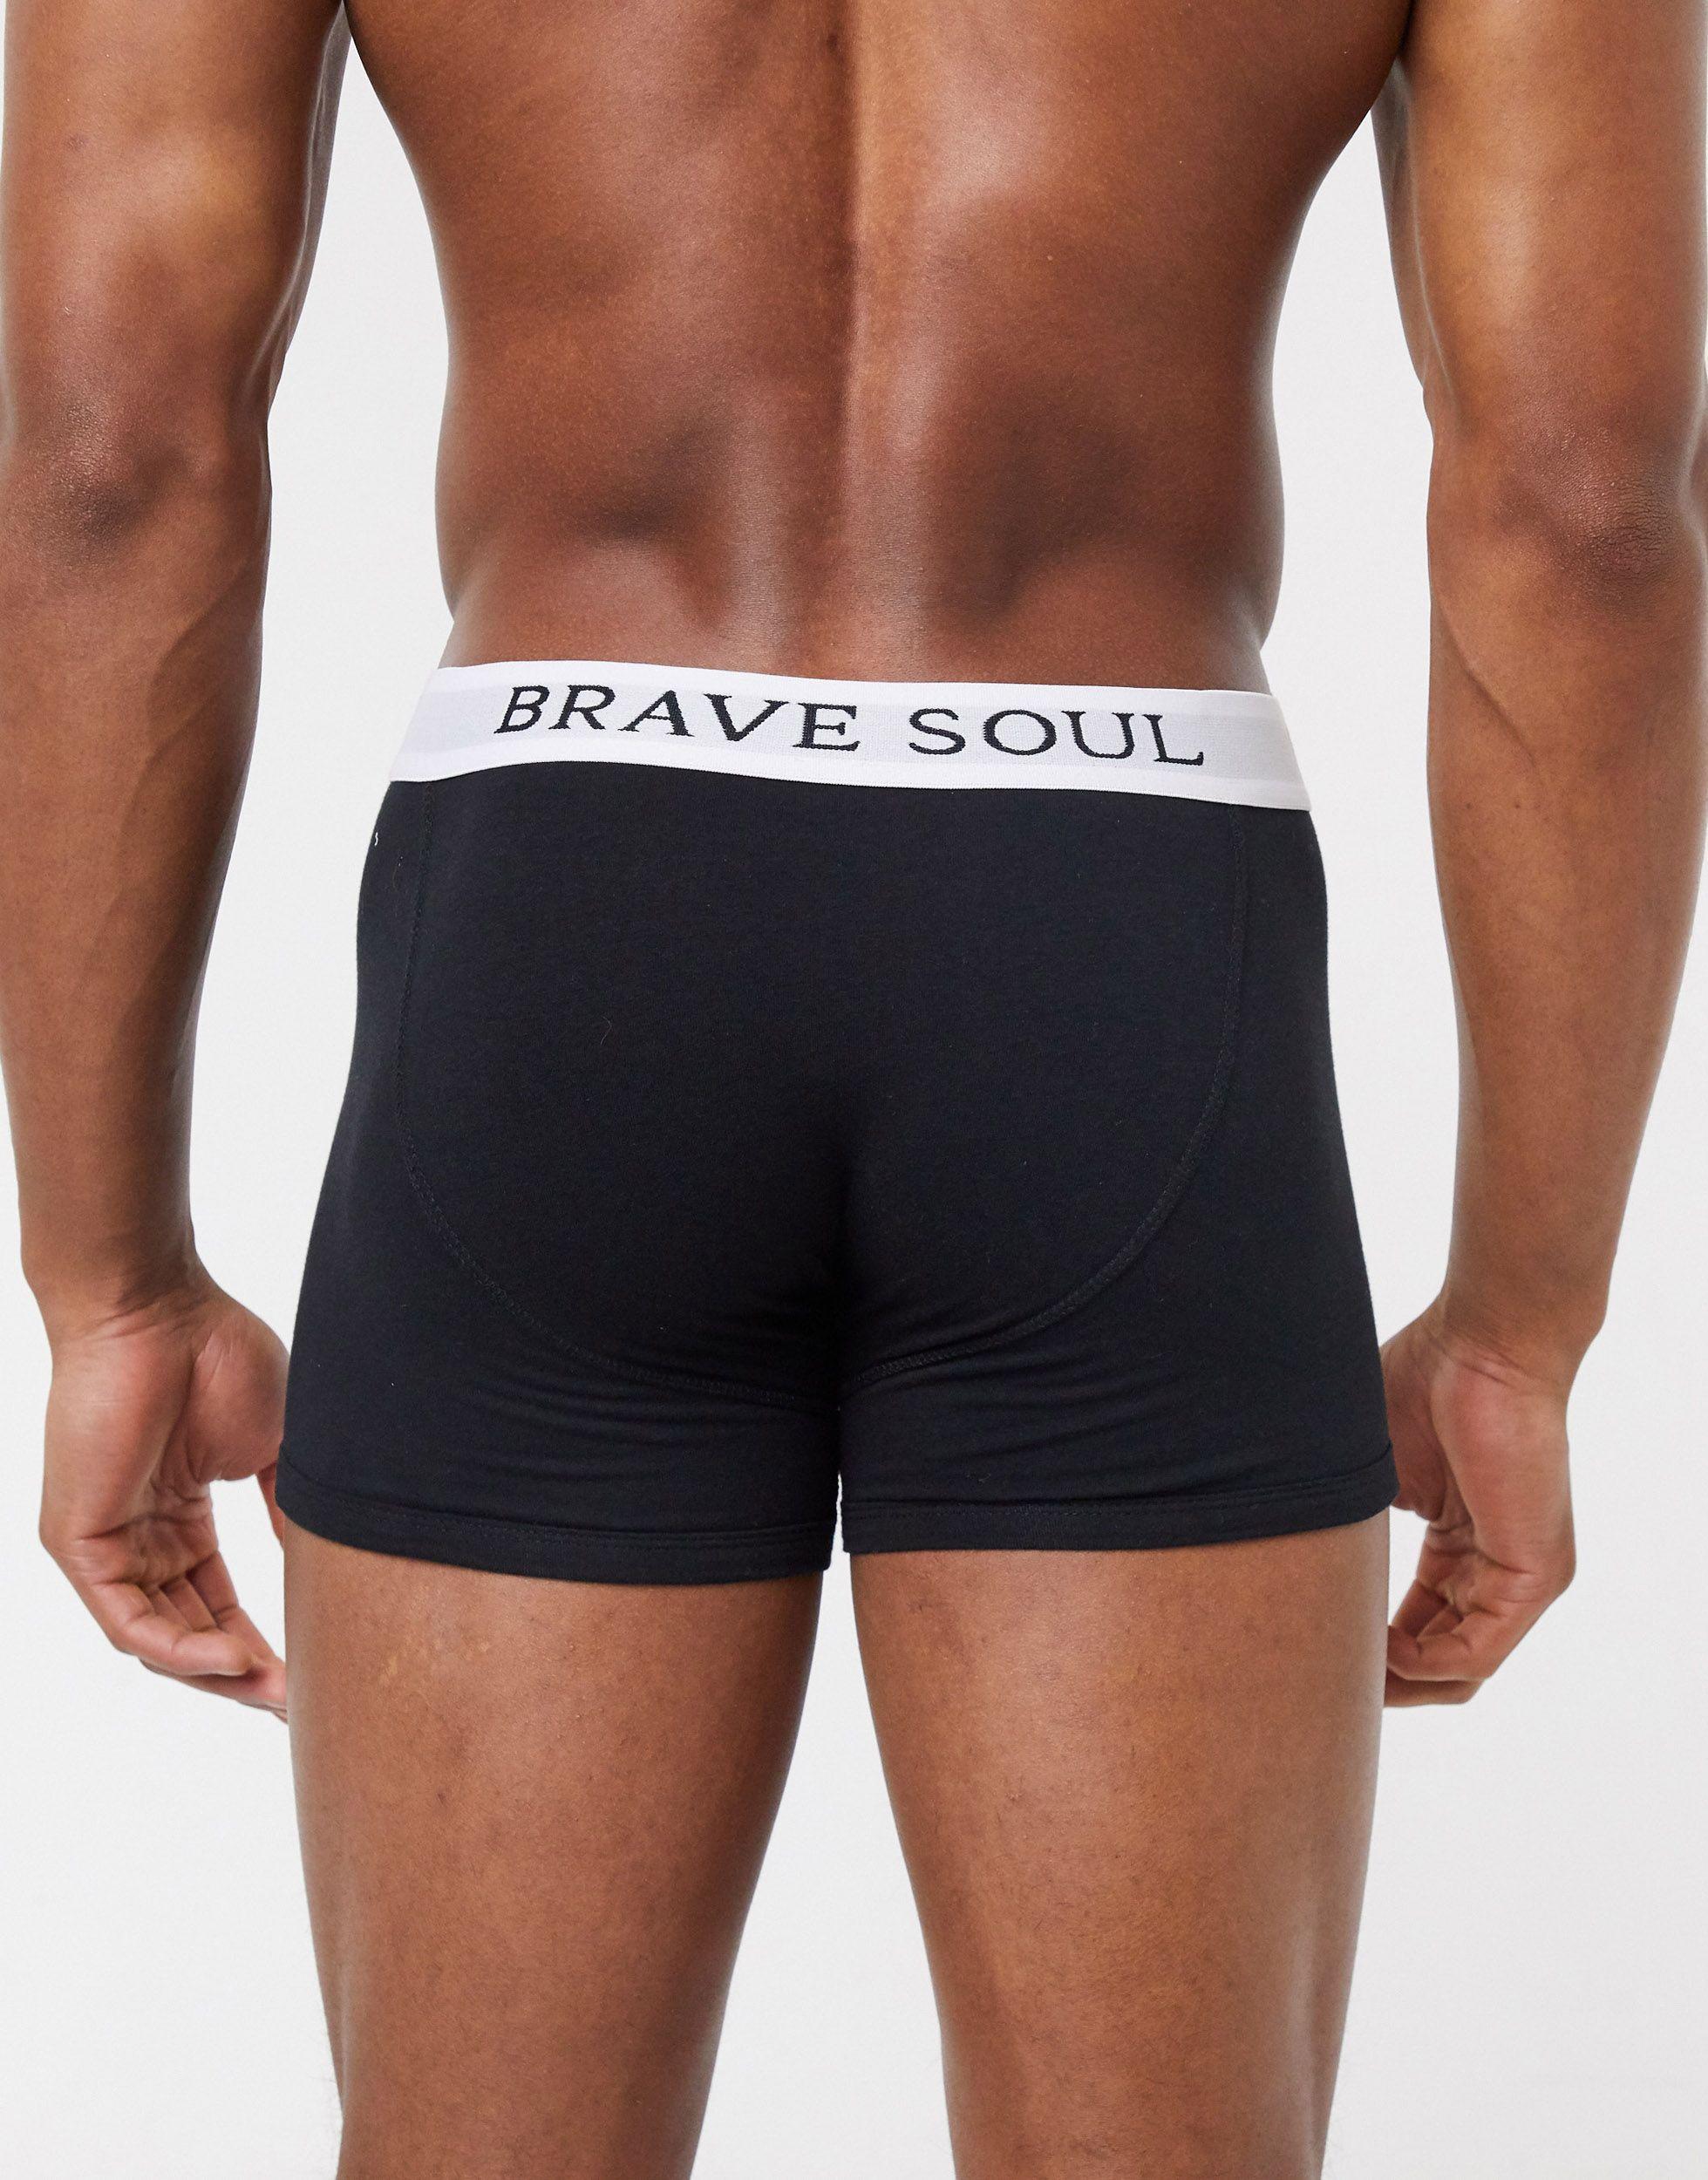 Brave Soul Cotton 2 Pack Boxers in Black for Men - Lyst